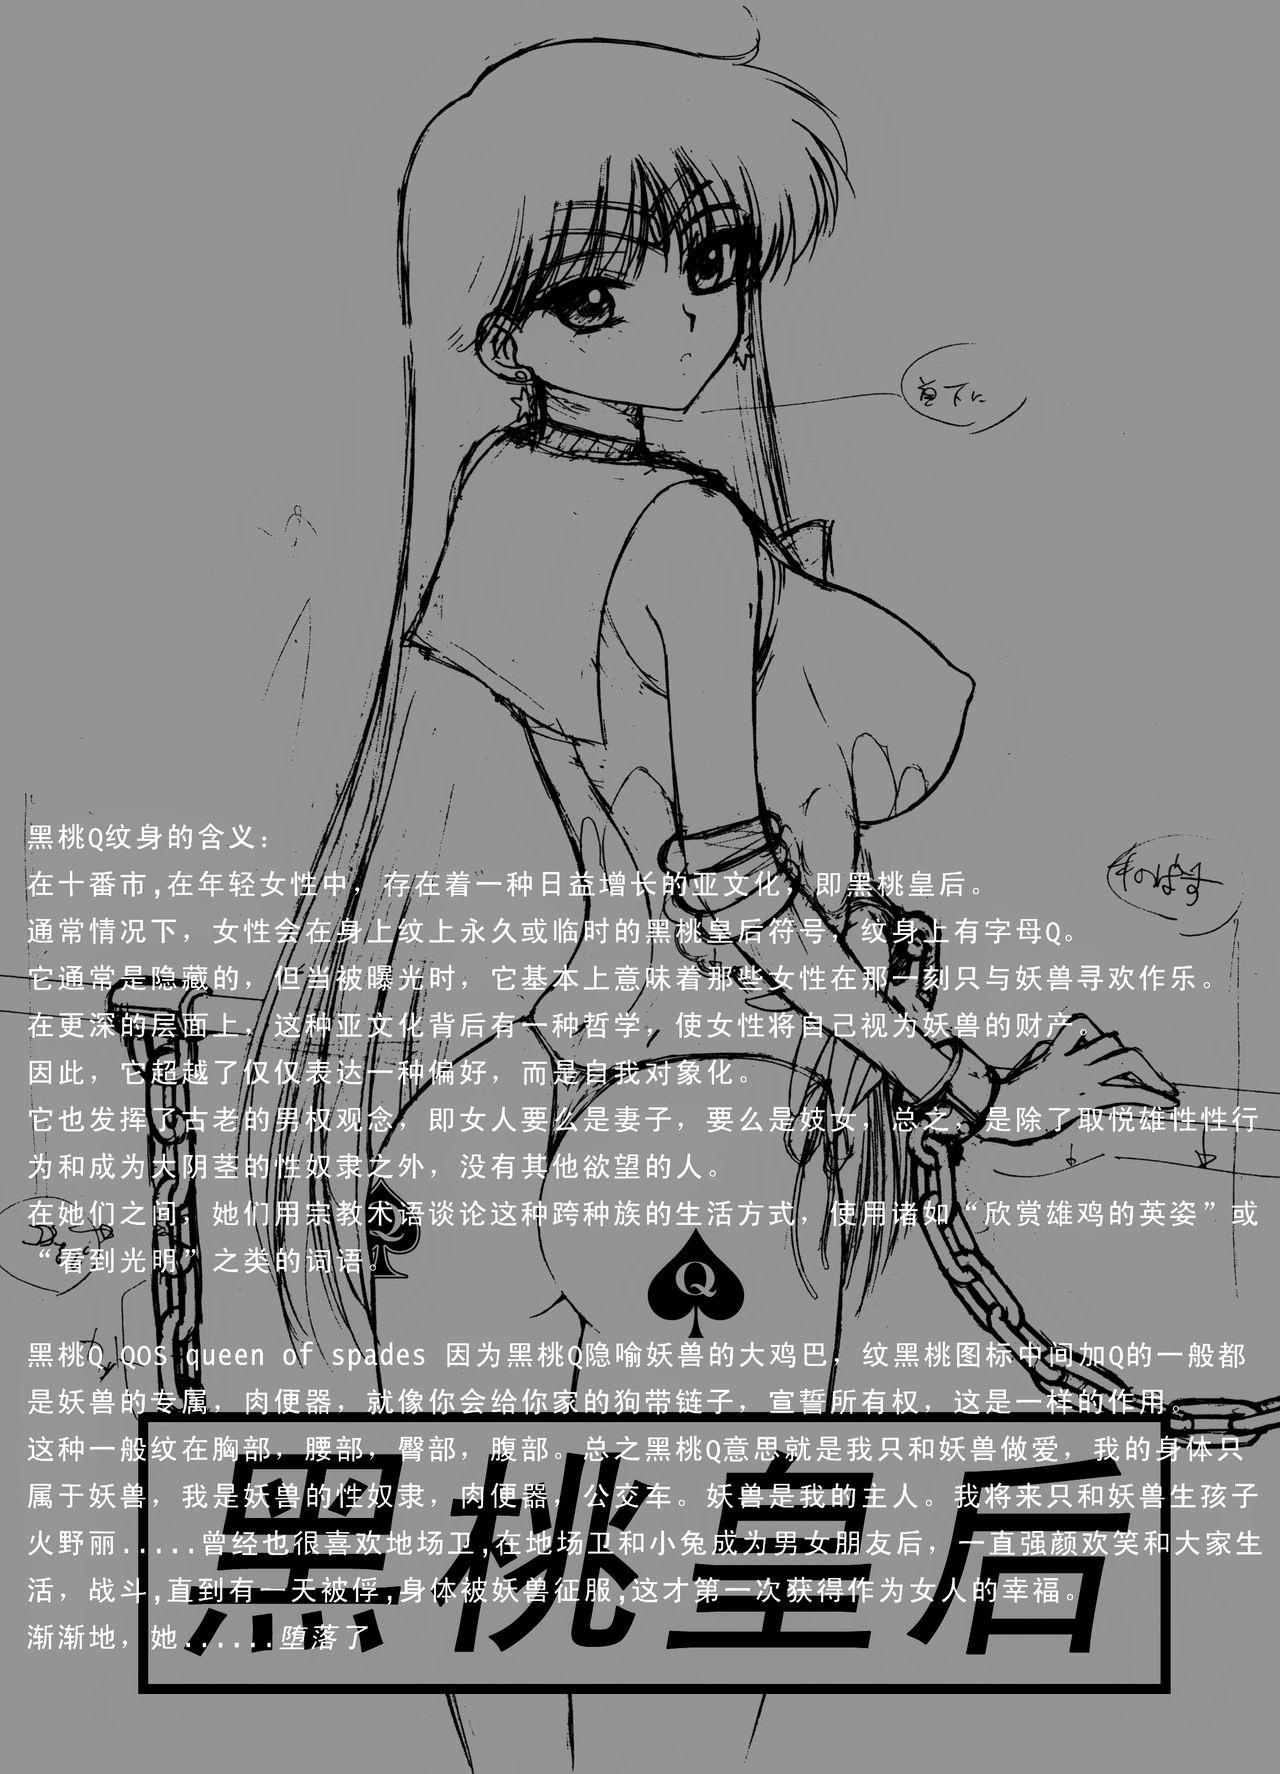 Hot Brunette QUEEN OF SPADES - 黑桃皇后 - Sailor moon Ethnic - Page 5